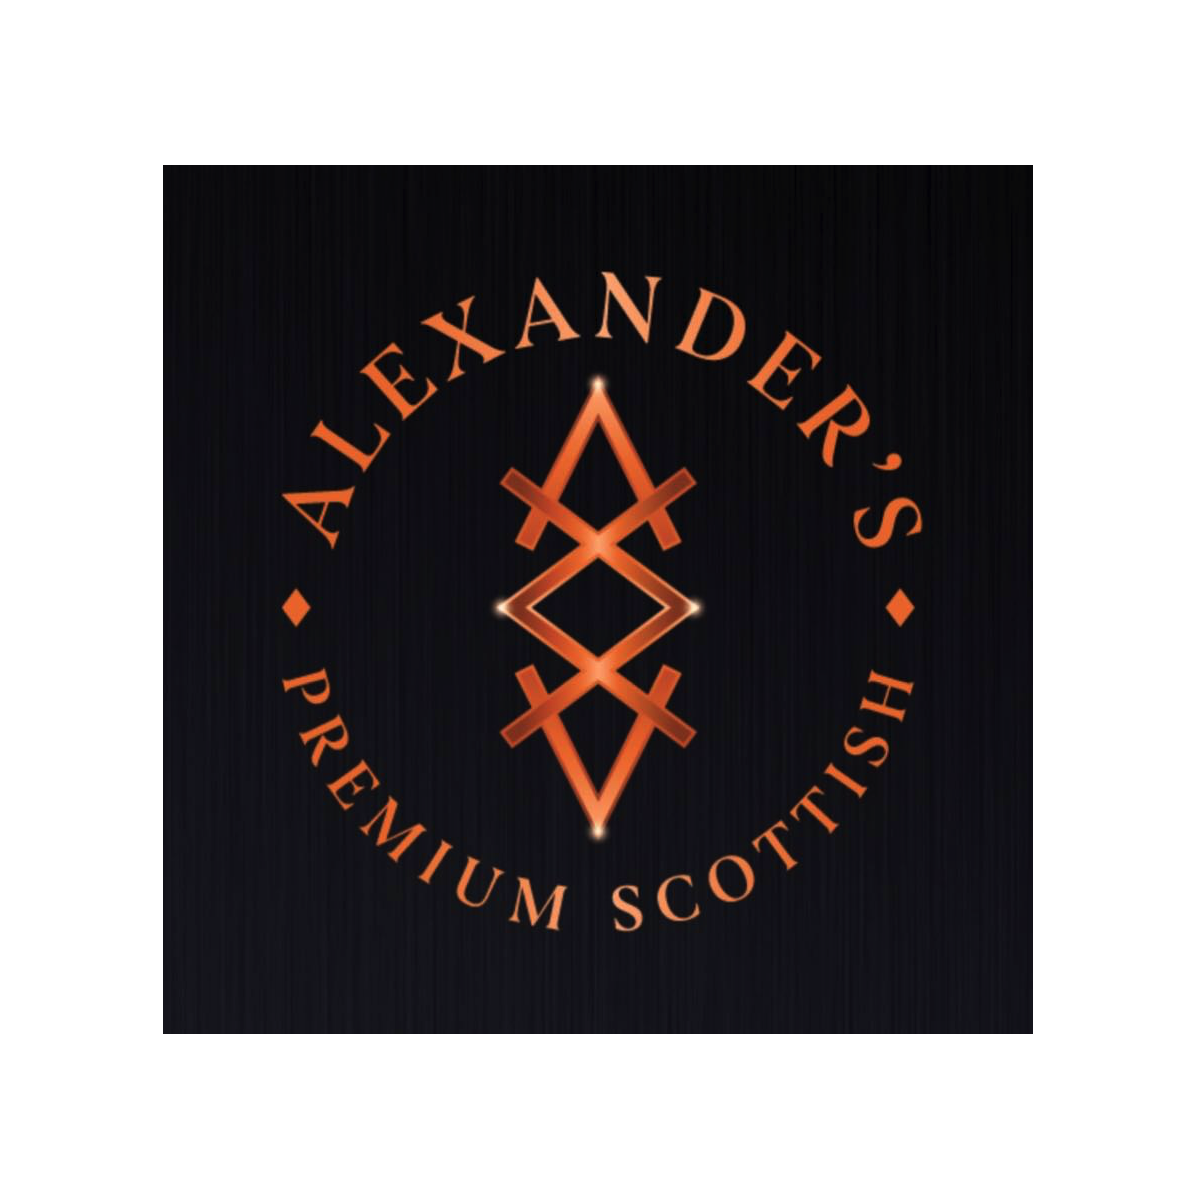 Alexander's Gin brand logo